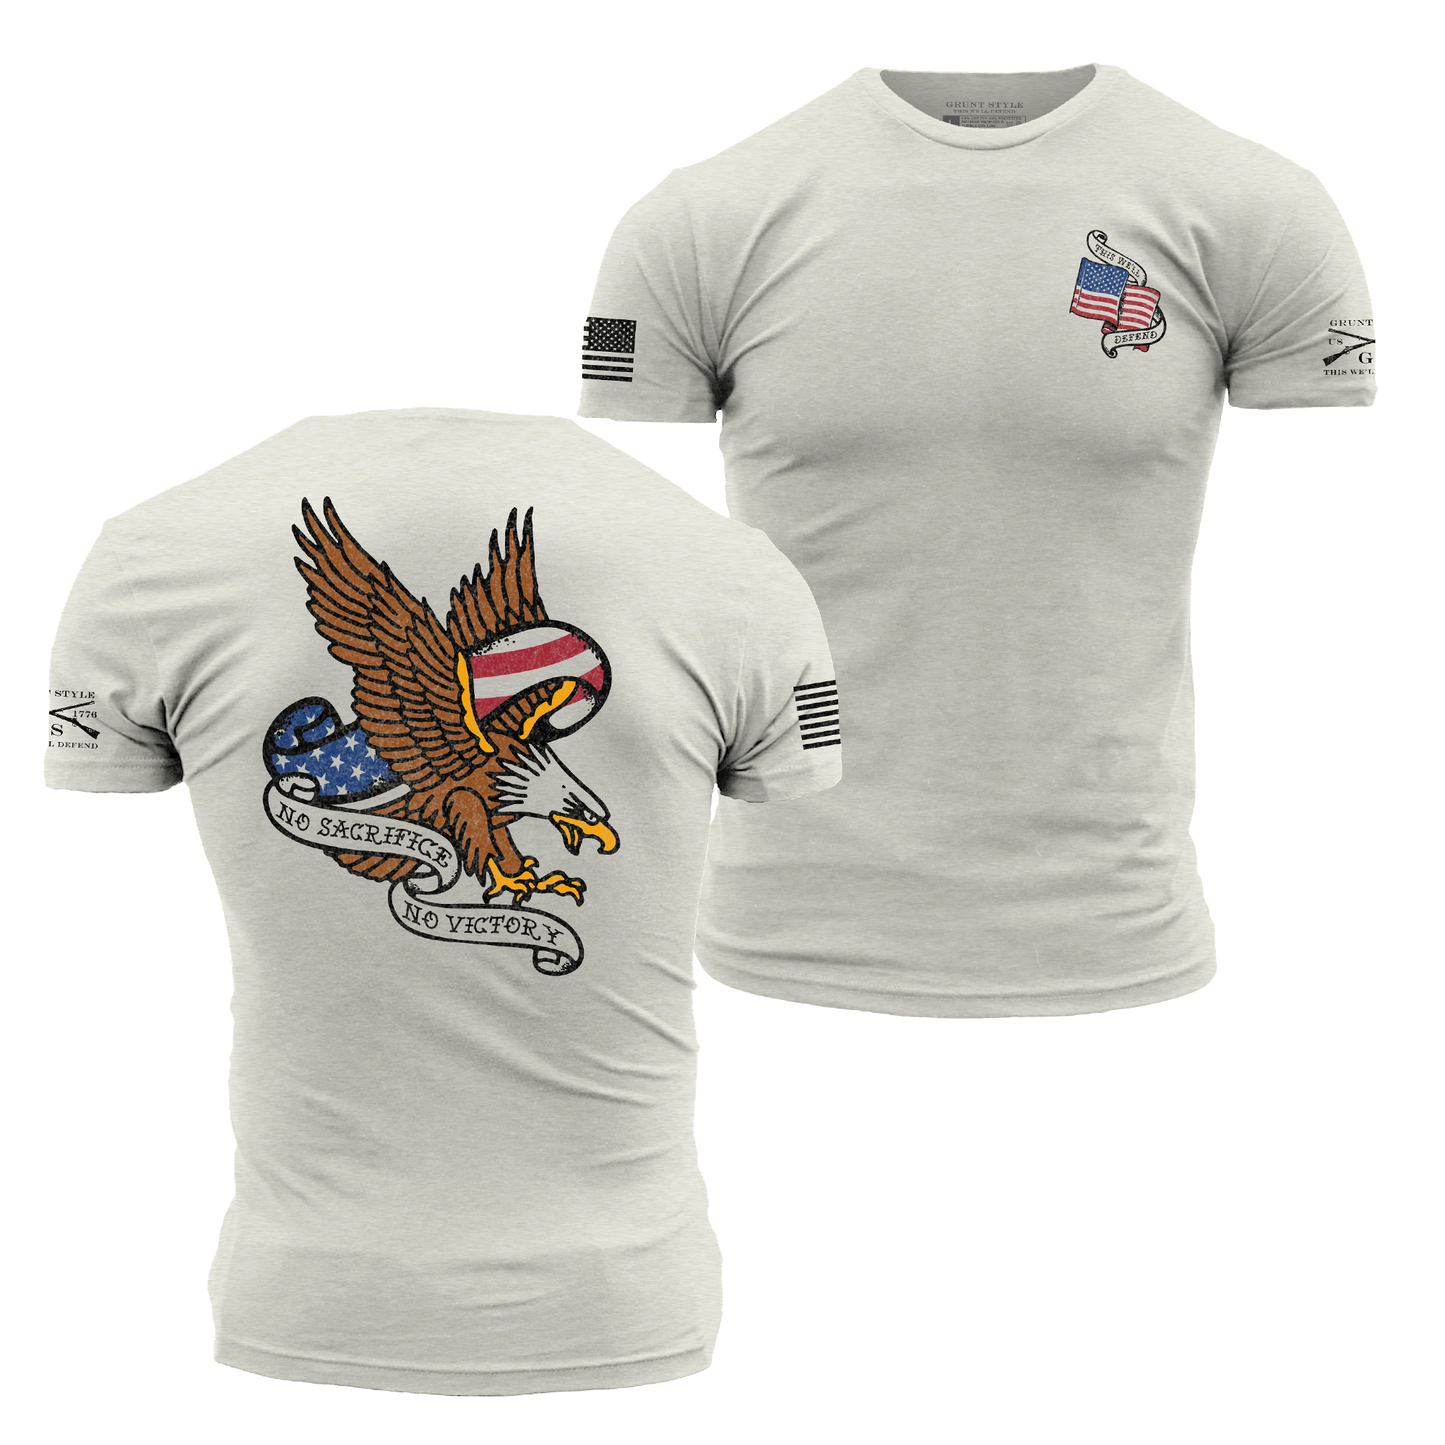 Patriotic T-Shirt - No Sacrifice - No Victory 